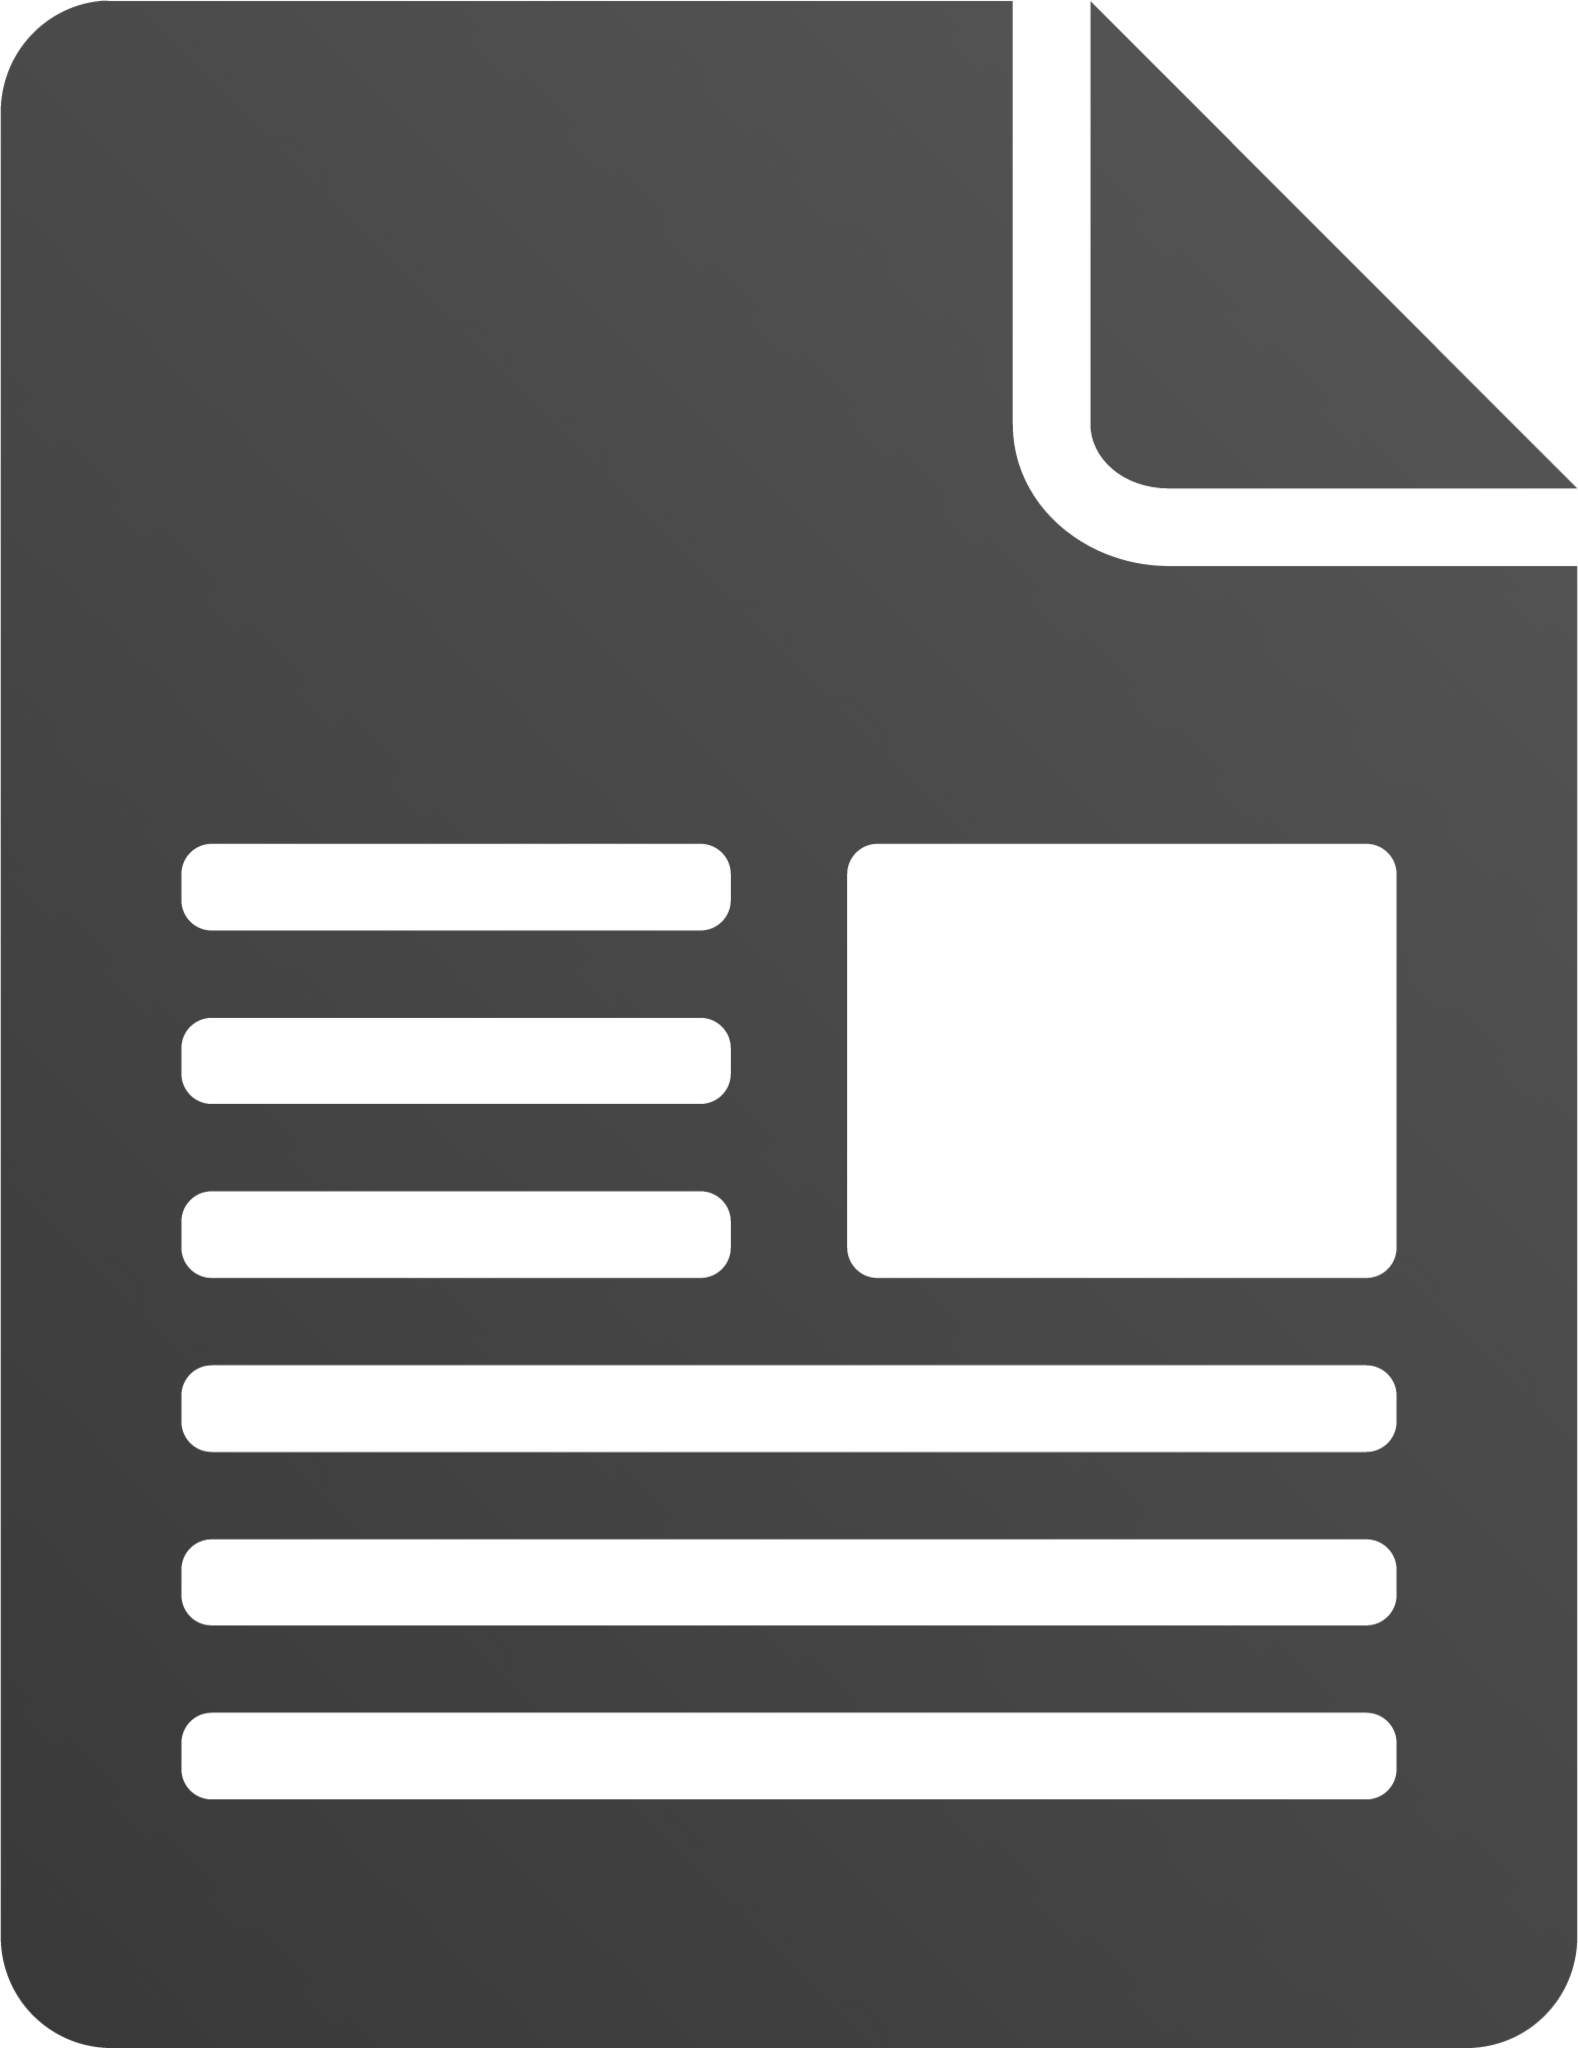 openofficeorg23 text icon